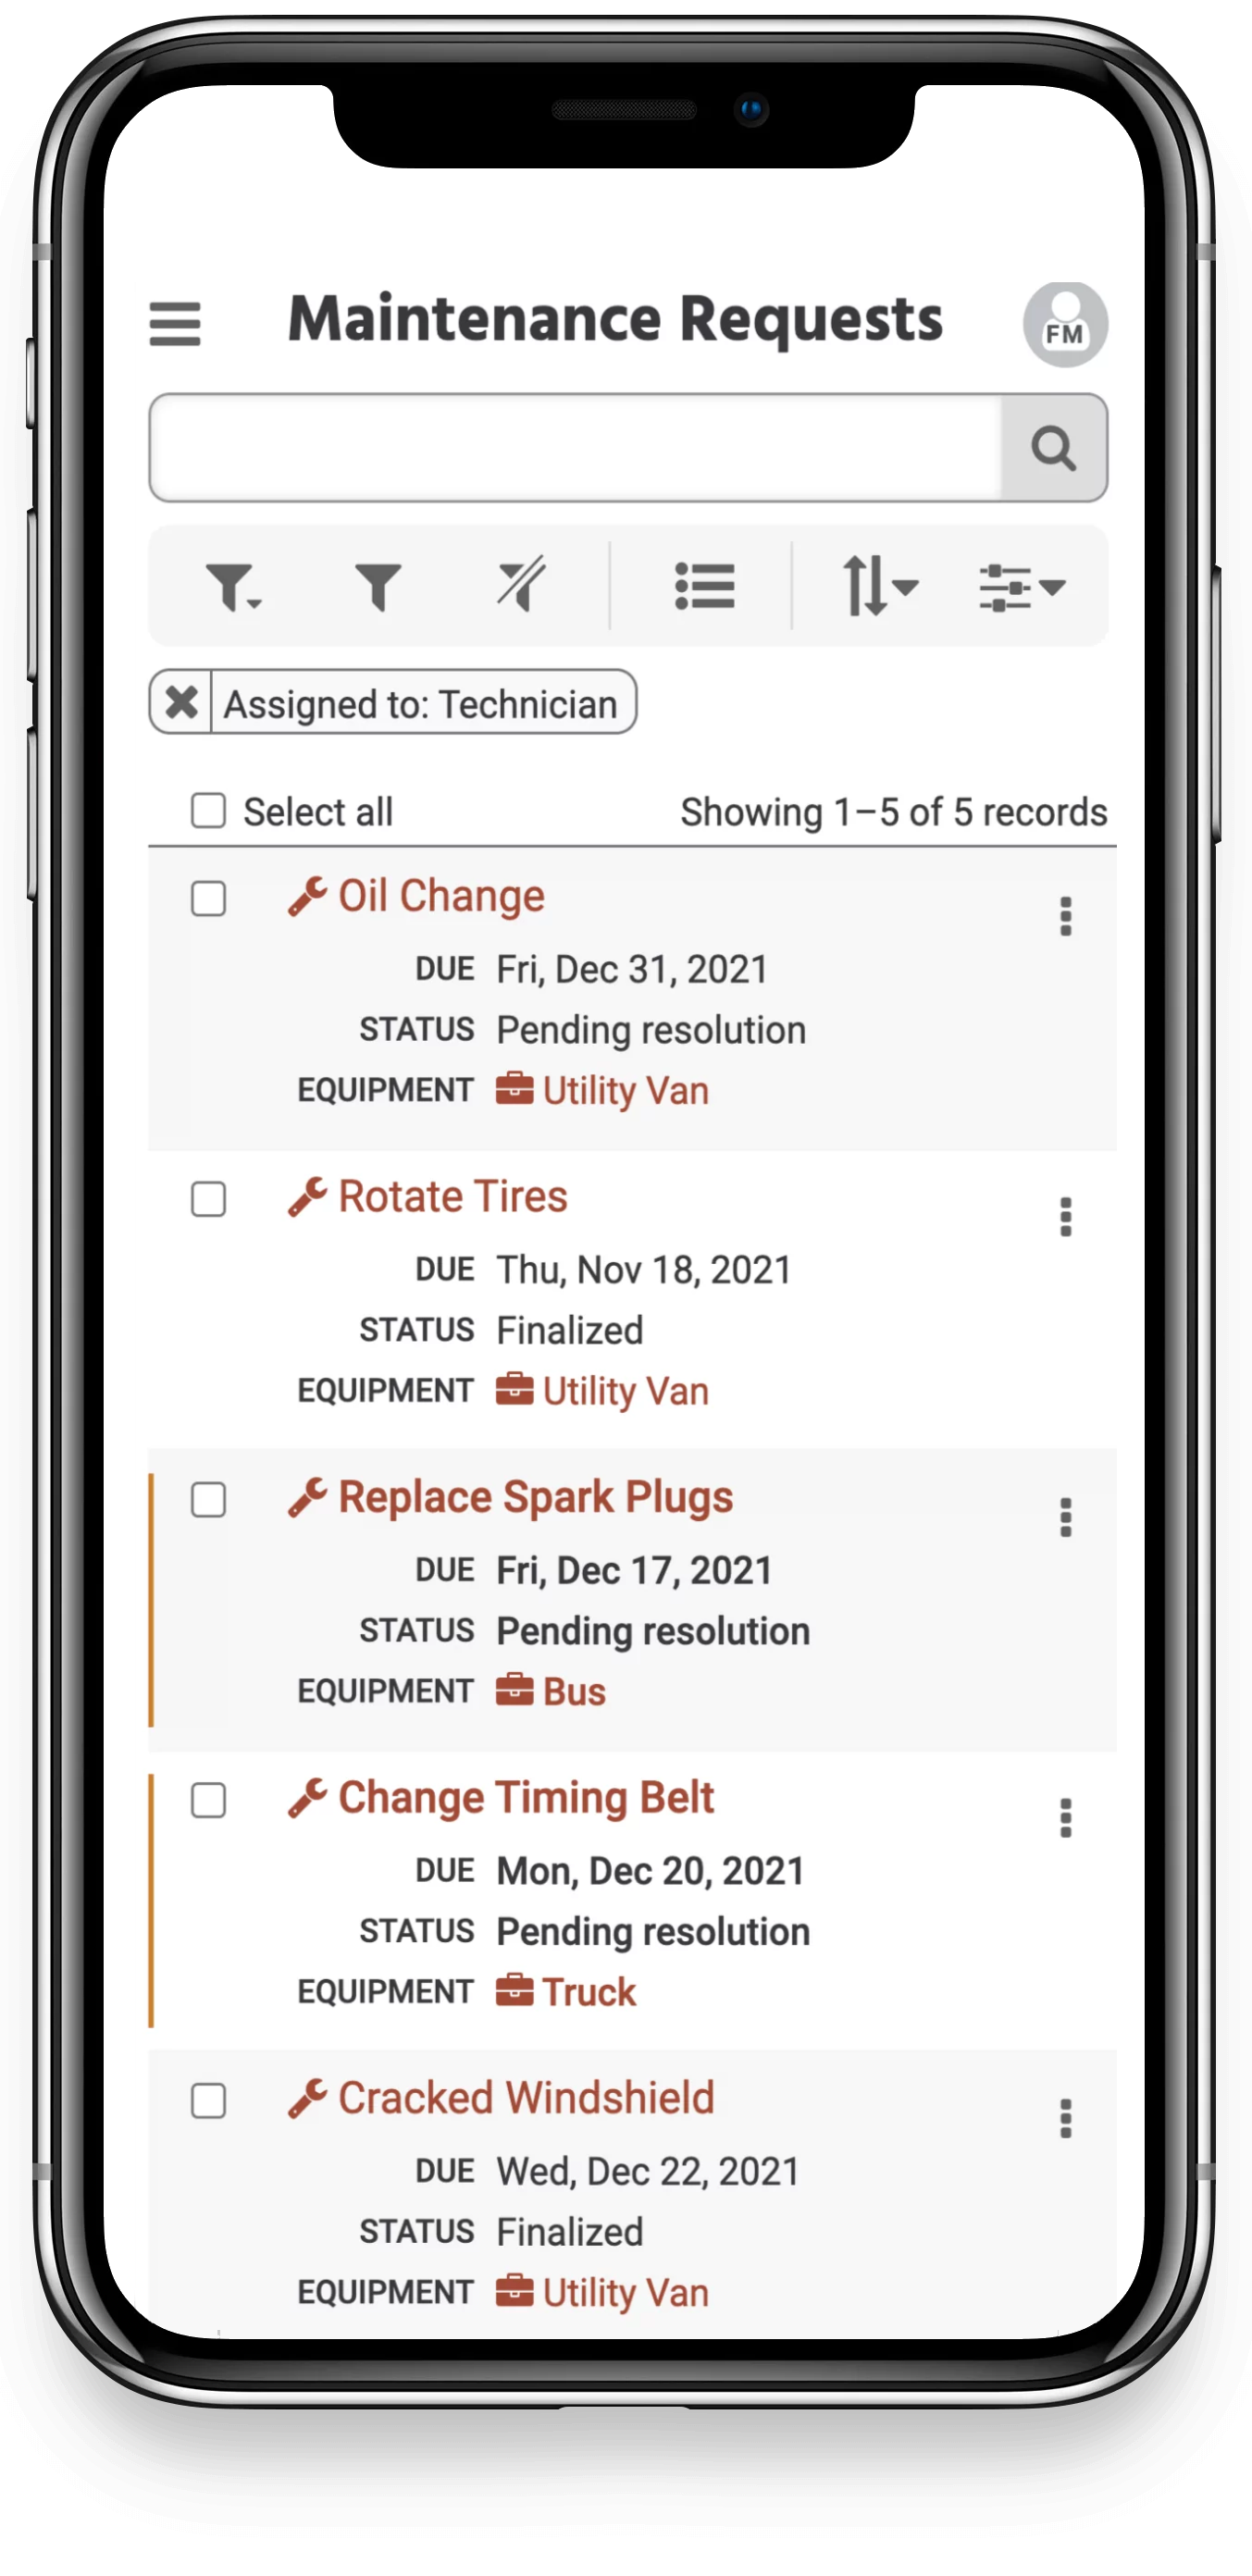 mobile fleet maintenance software list screen can include tasks like 